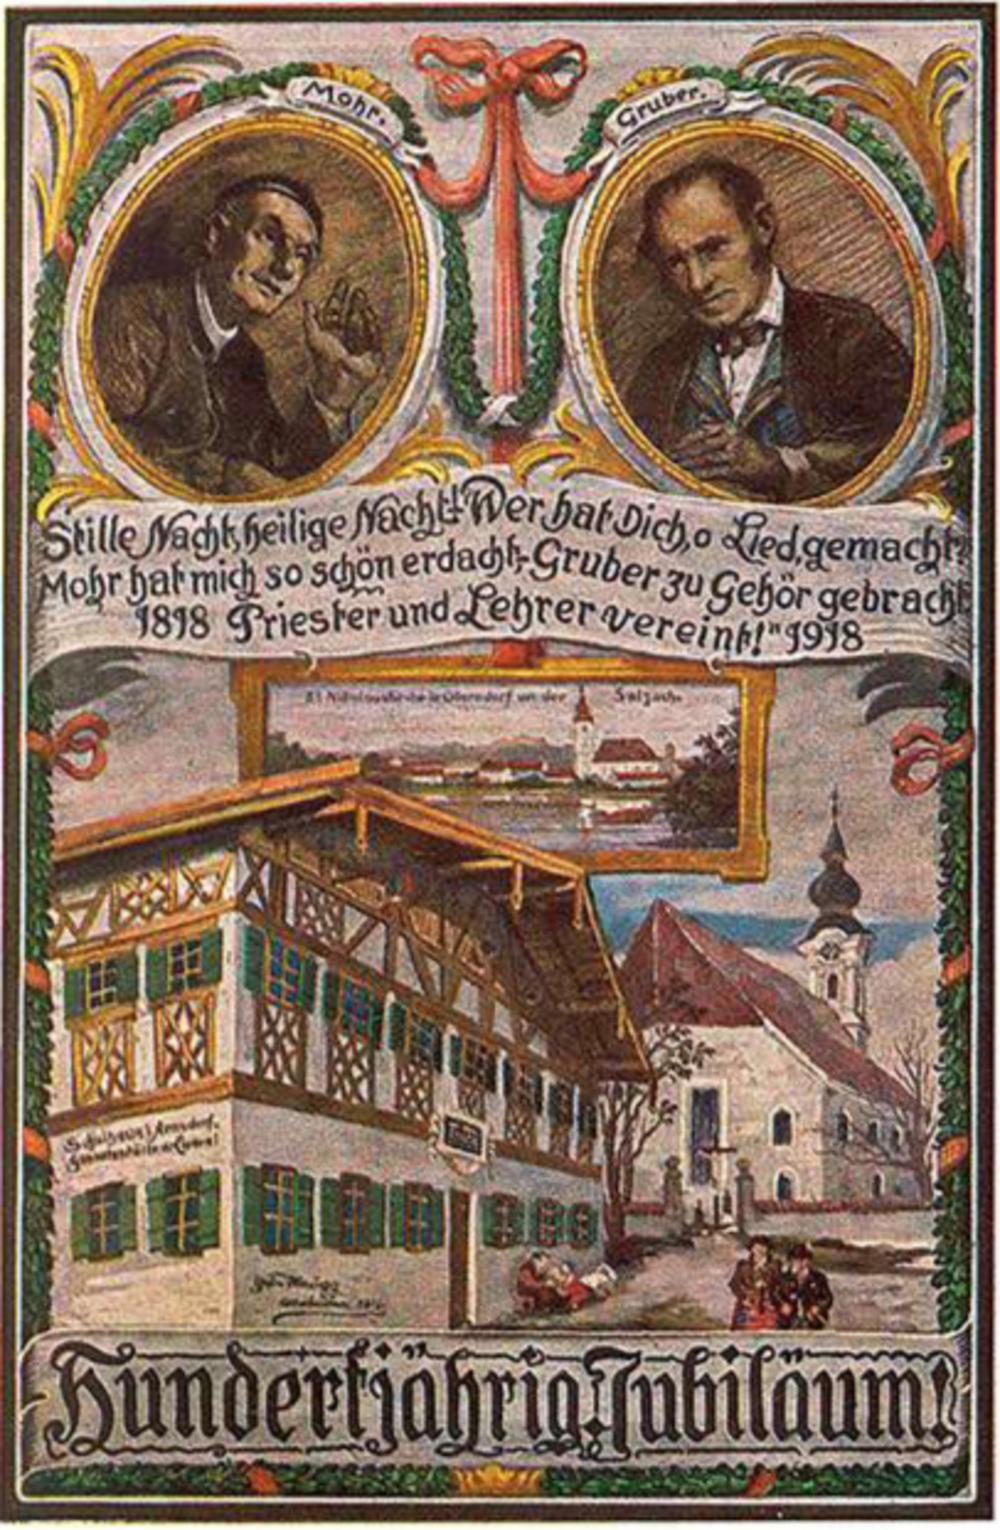 Ansichtkaart uitgegeven ter gelegenheid van het honderdjarig jubileum van Stille Nacht in 1918.